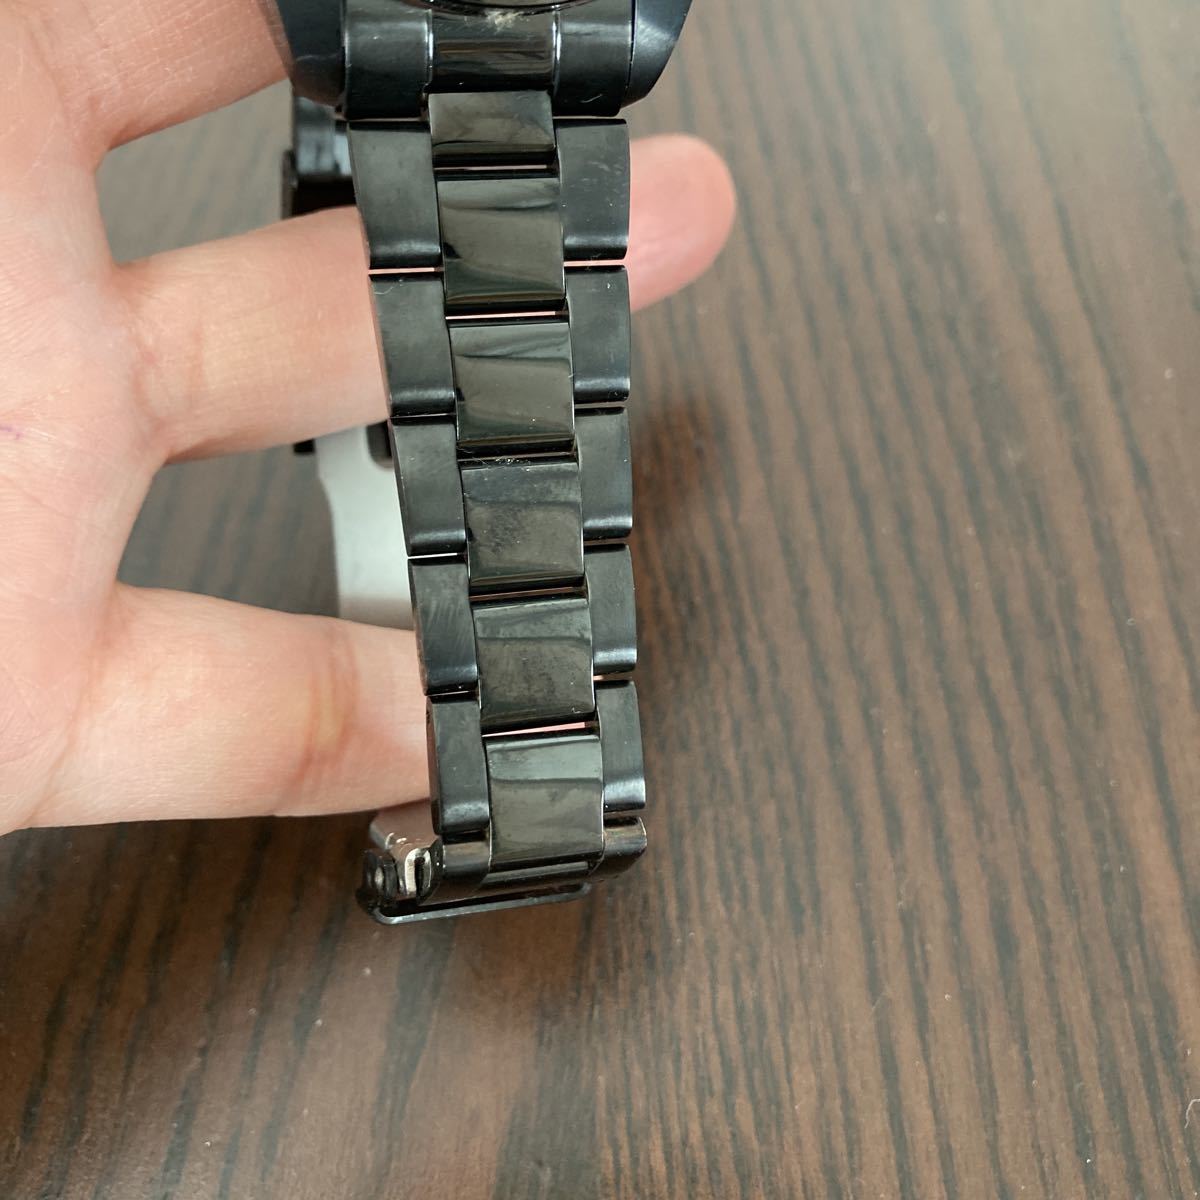 Daniel Muller ダニエルミューラー メンズ 腕時計 ブラック Dm 1001 アナログ クォーツ式 売買されたオークション情報 Yahooの商品情報をアーカイブ公開 オークファン Aucfan Com